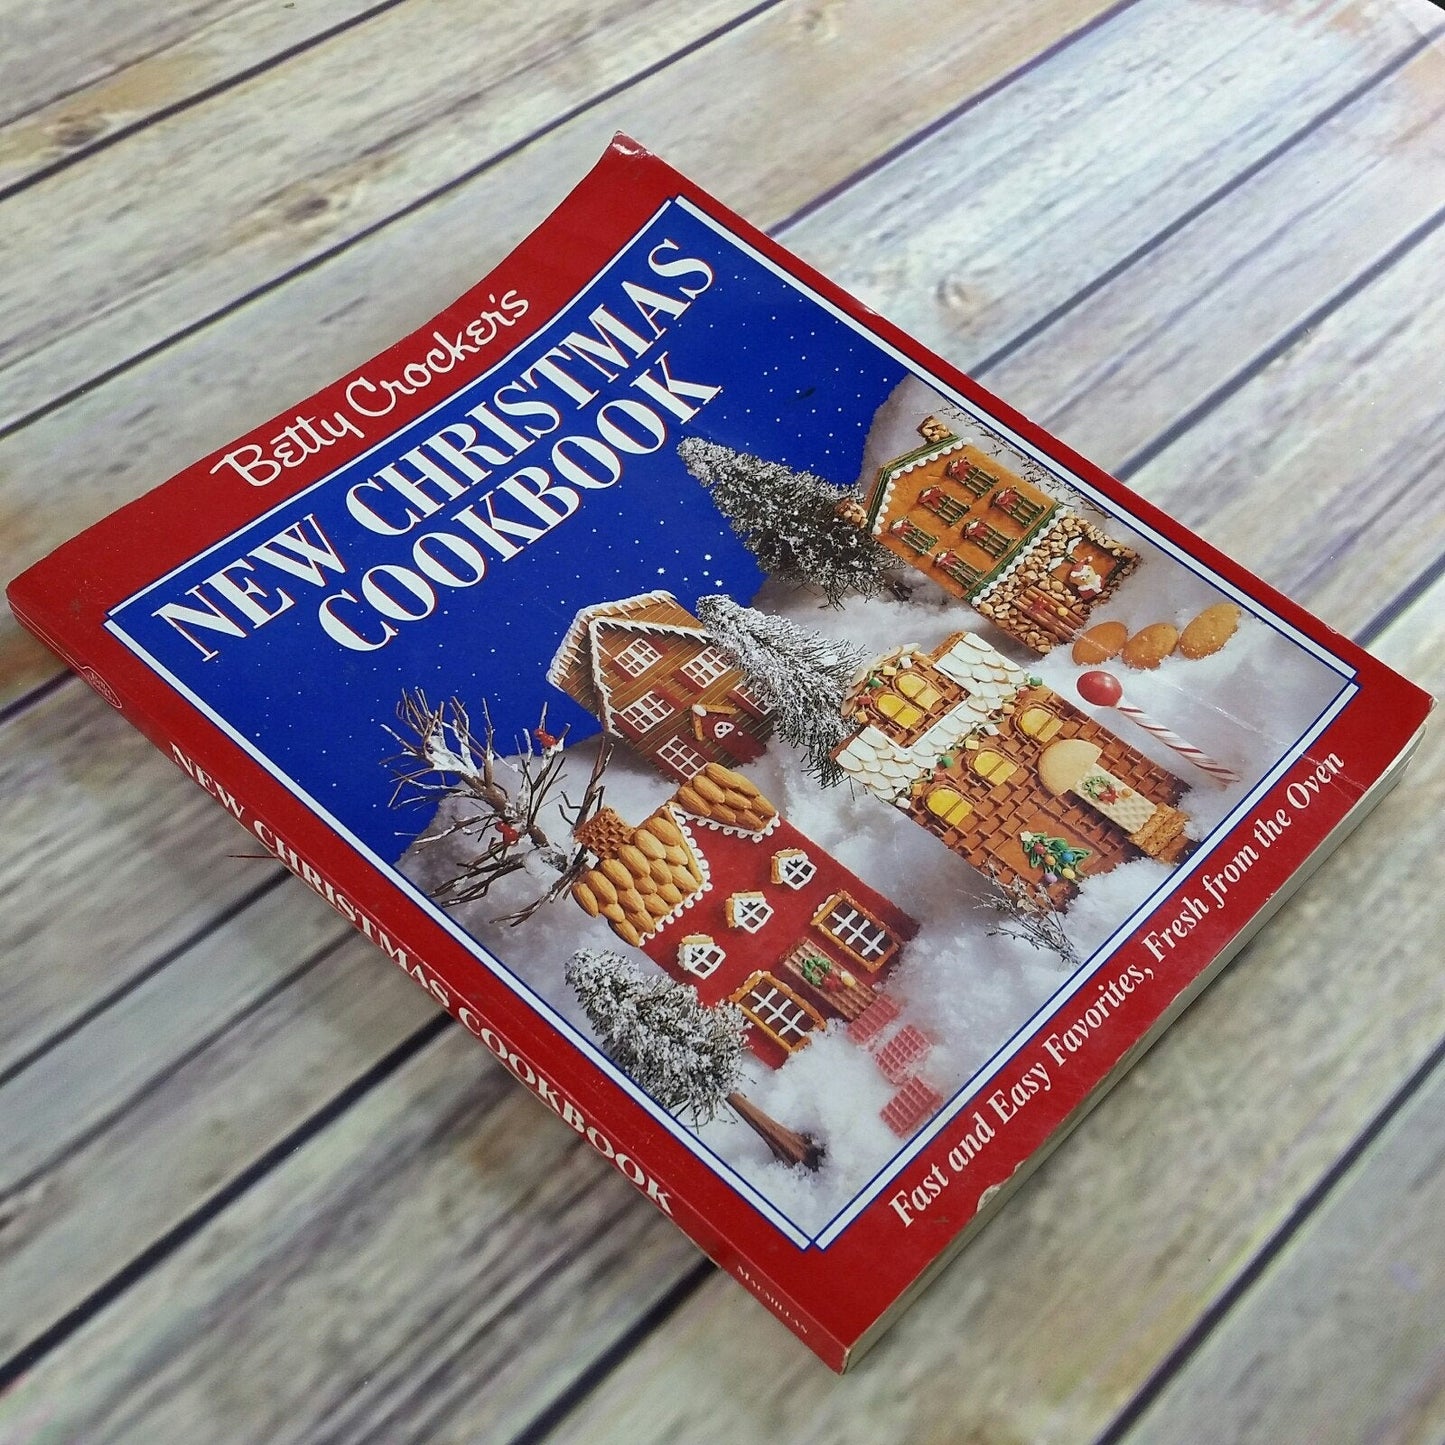 Vintage Cookbook Betty Crocker New Christmas Cookbook 1993 Paperback 90s General Mills Cookies Candy Holiday Menus Desserts